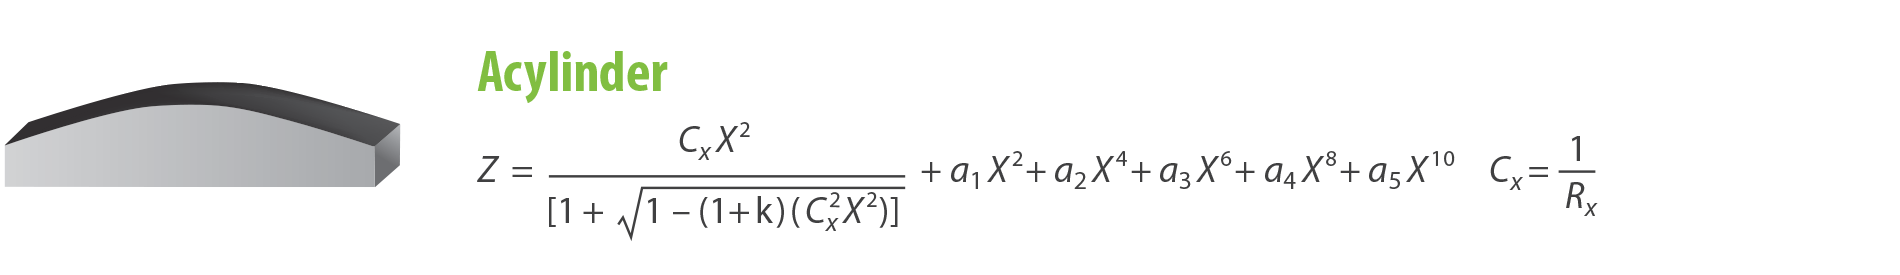 Acylinder formula